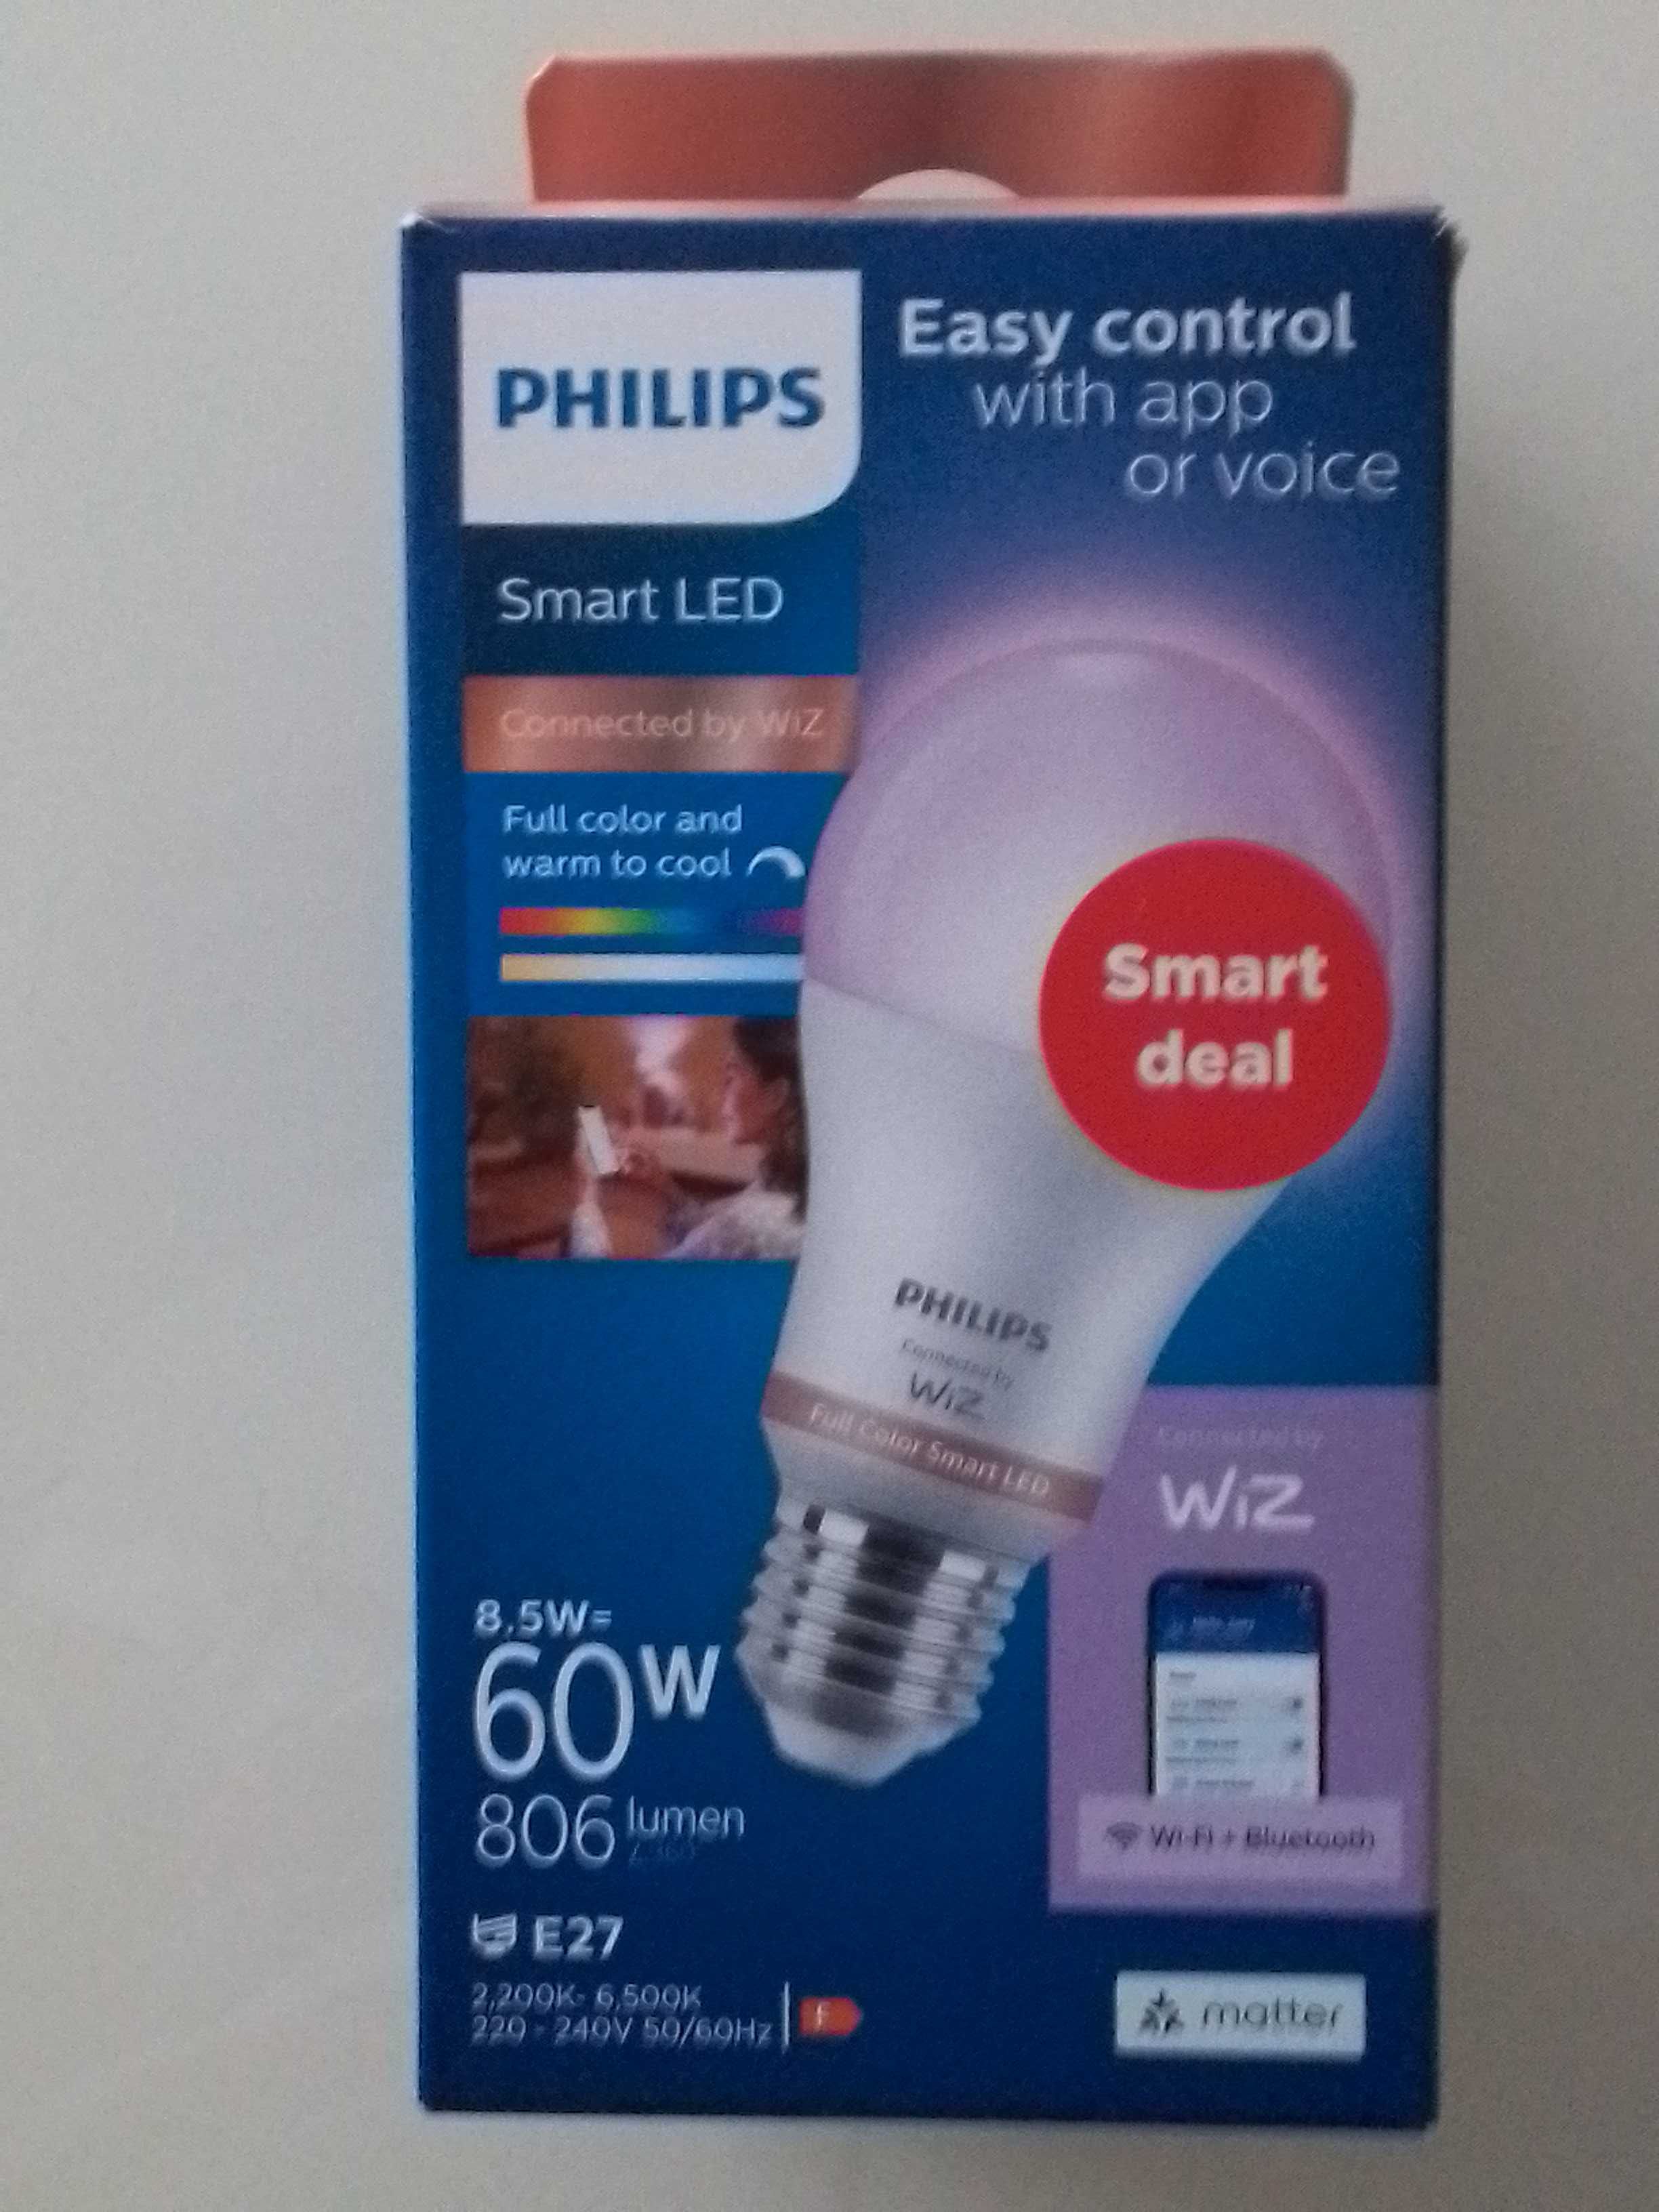 Philips smart Led 60W 806lumen E 27 zarowka